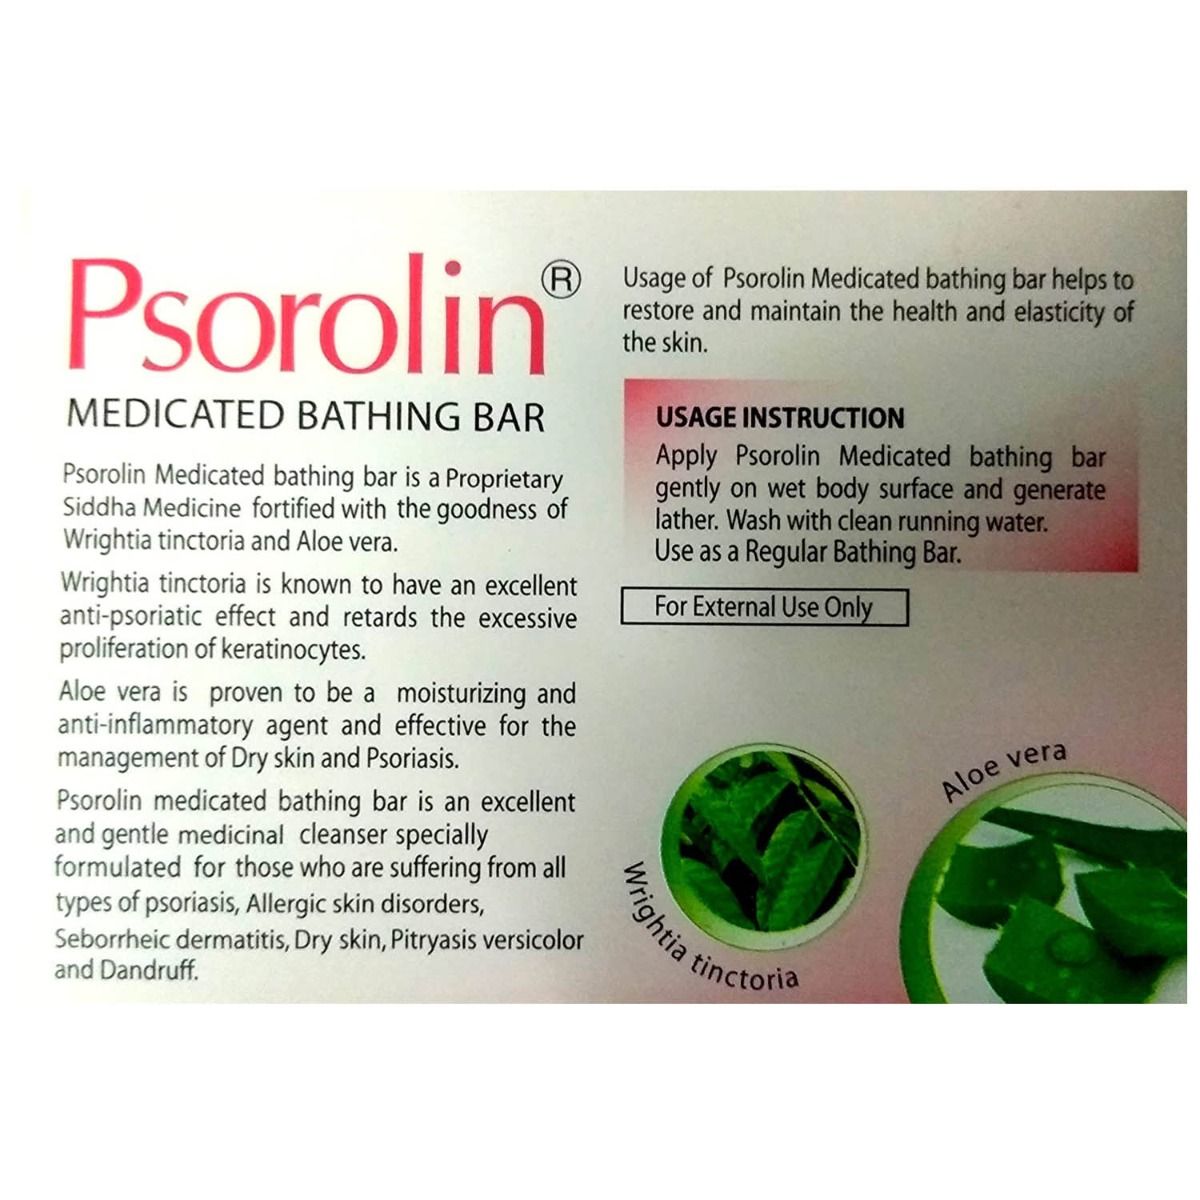 Psorolin  Soap, 75 gm, Pack of 1 